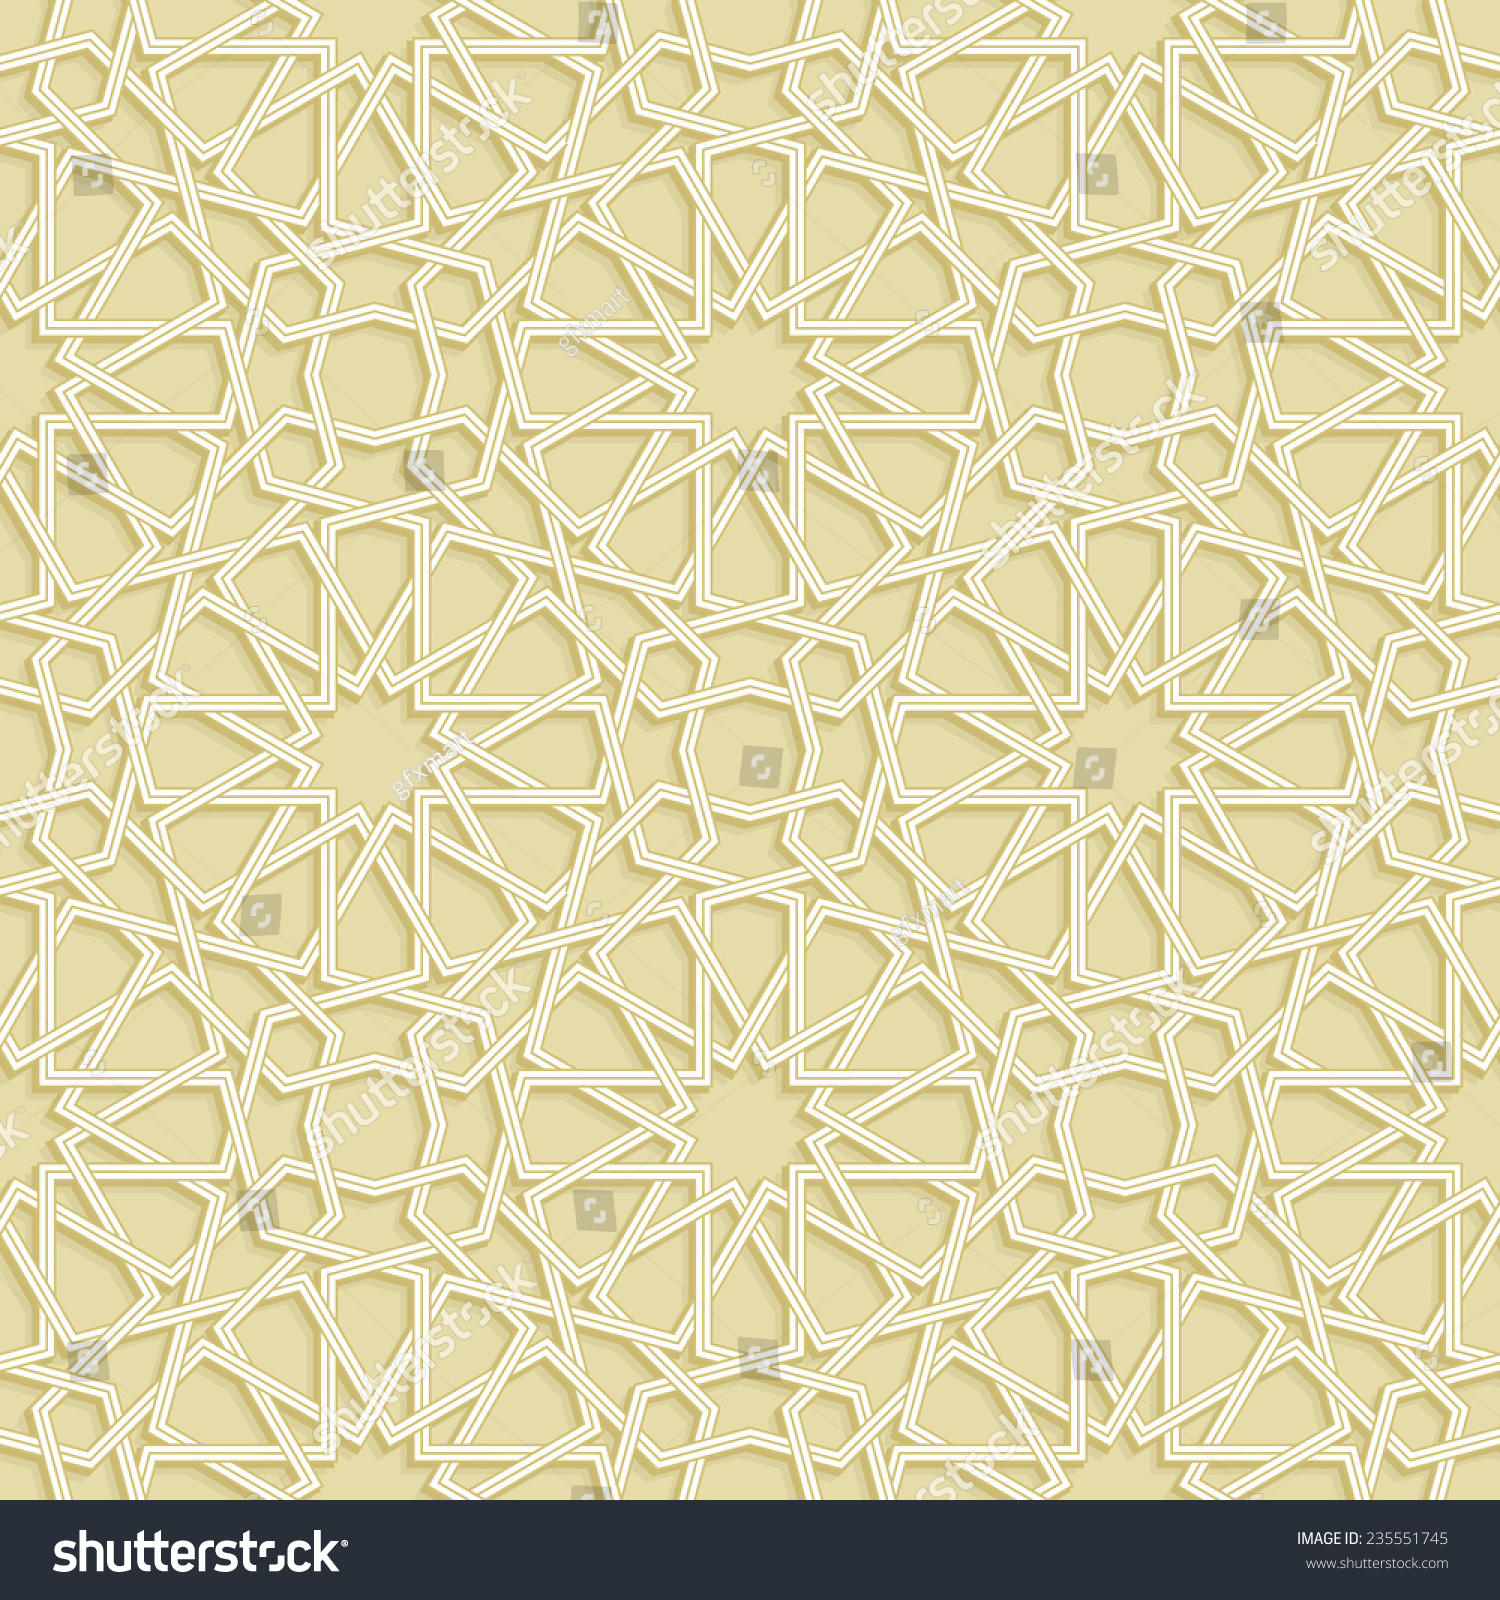 Islamic Star Gold Pattern Vector Illustration Stock Vector 235551745 ...